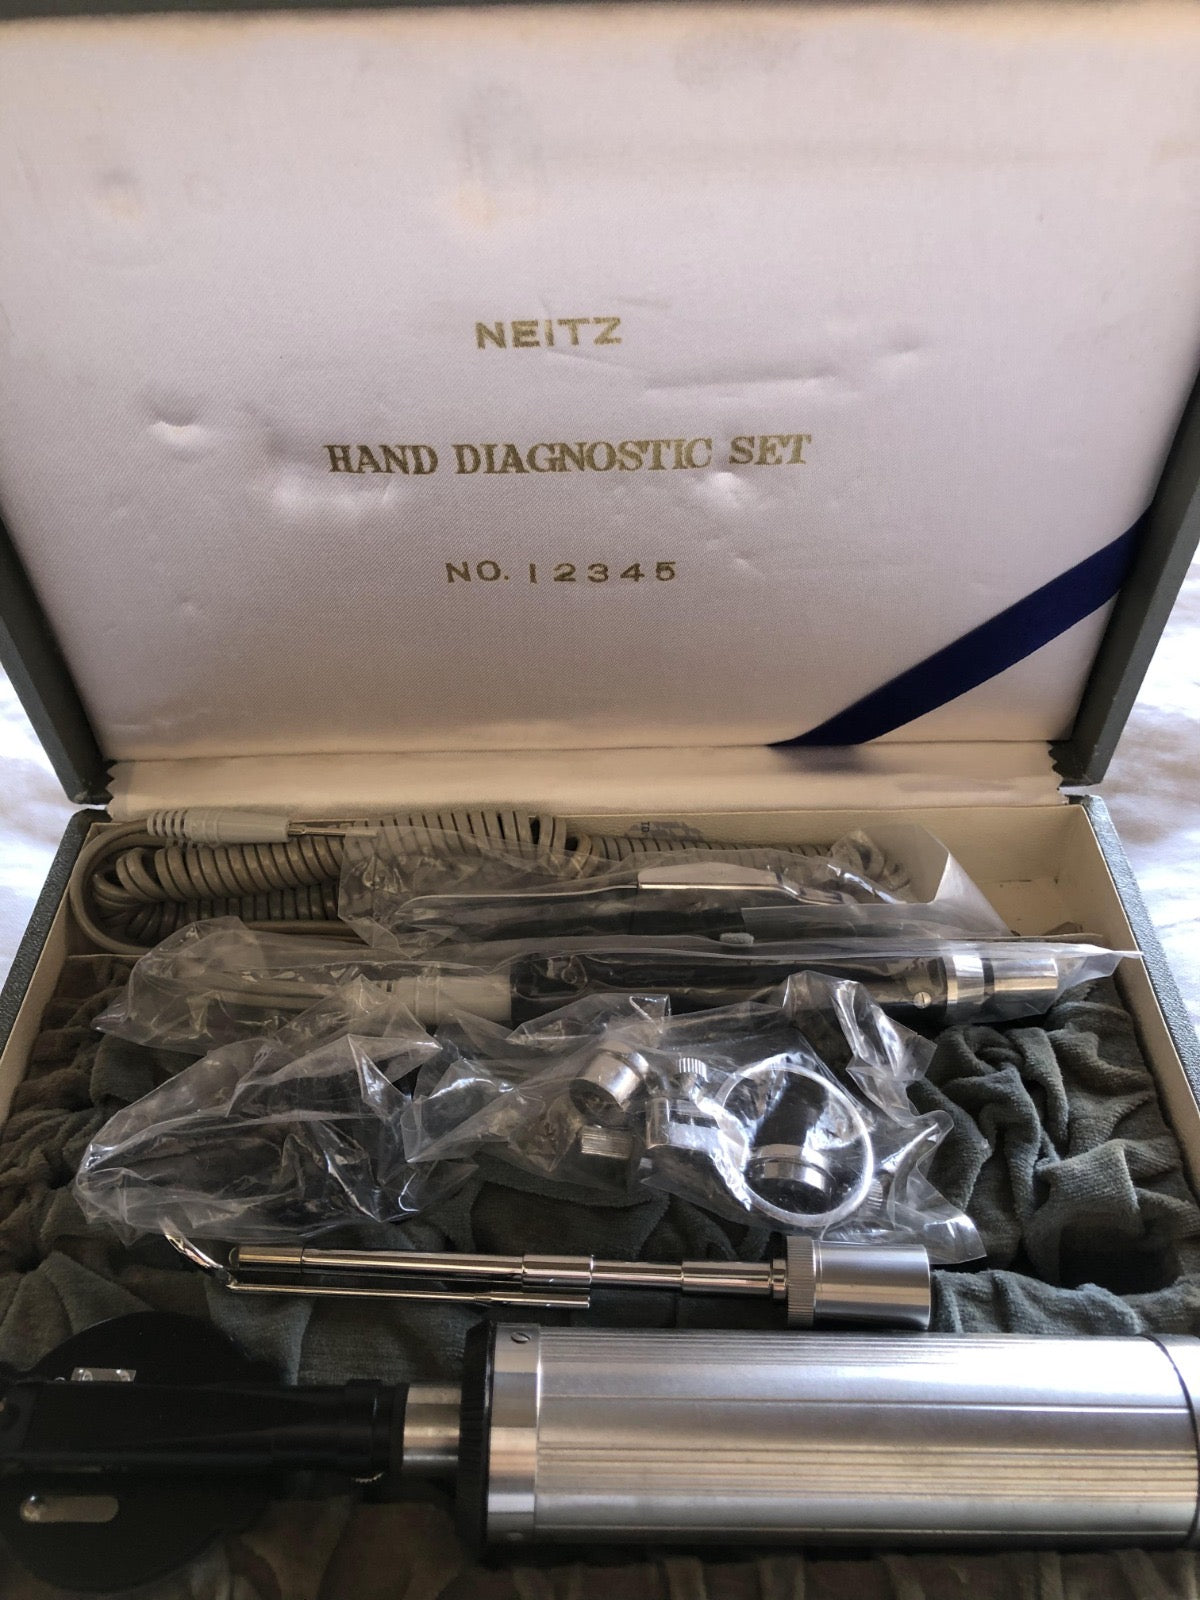 Neitz hand diagnostic set